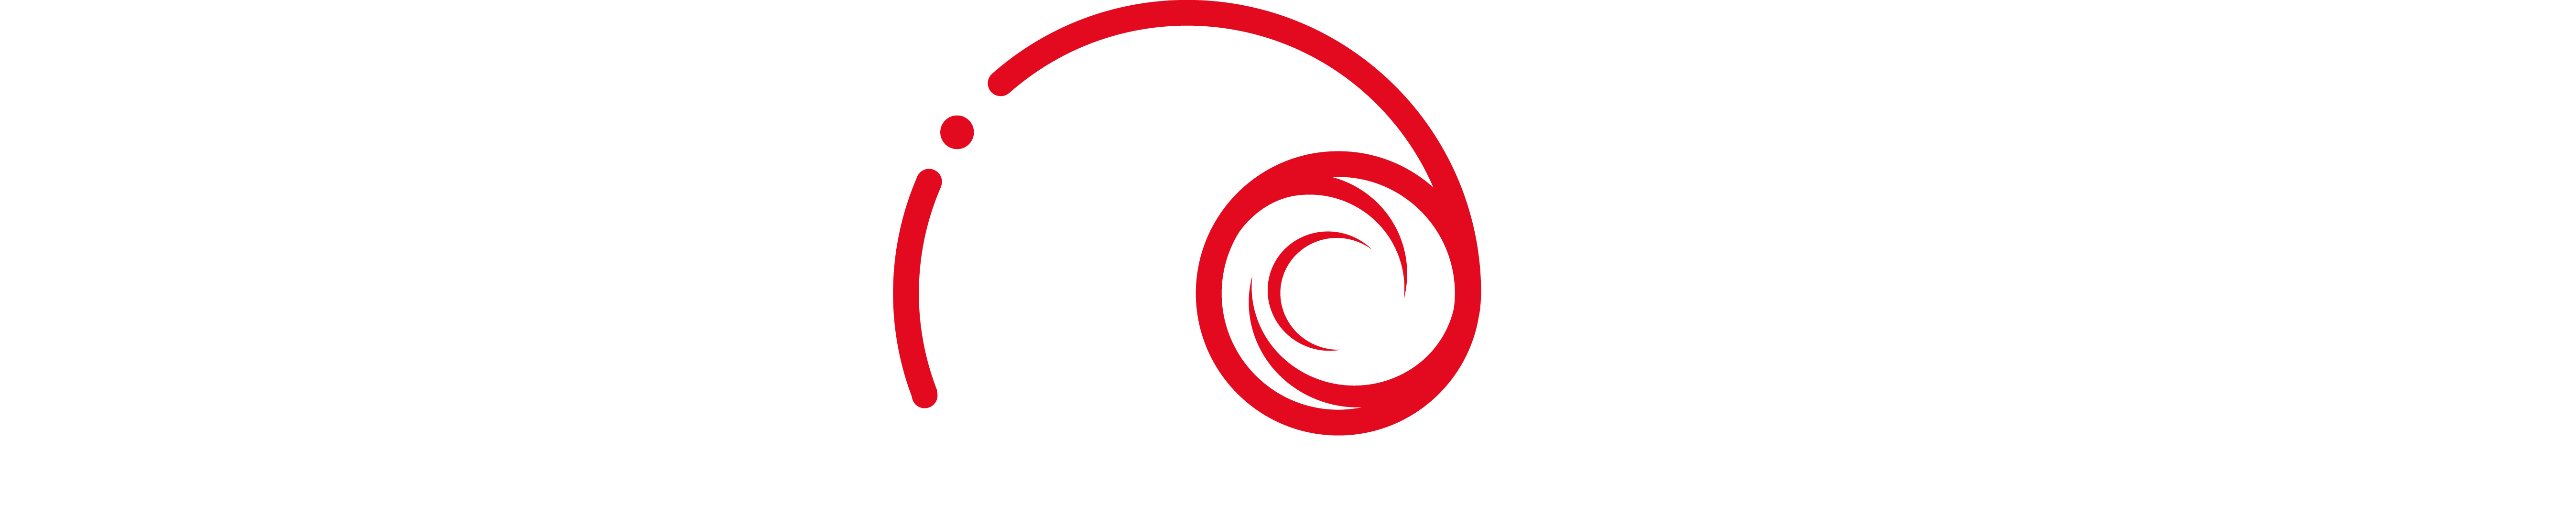 imaginovation.net